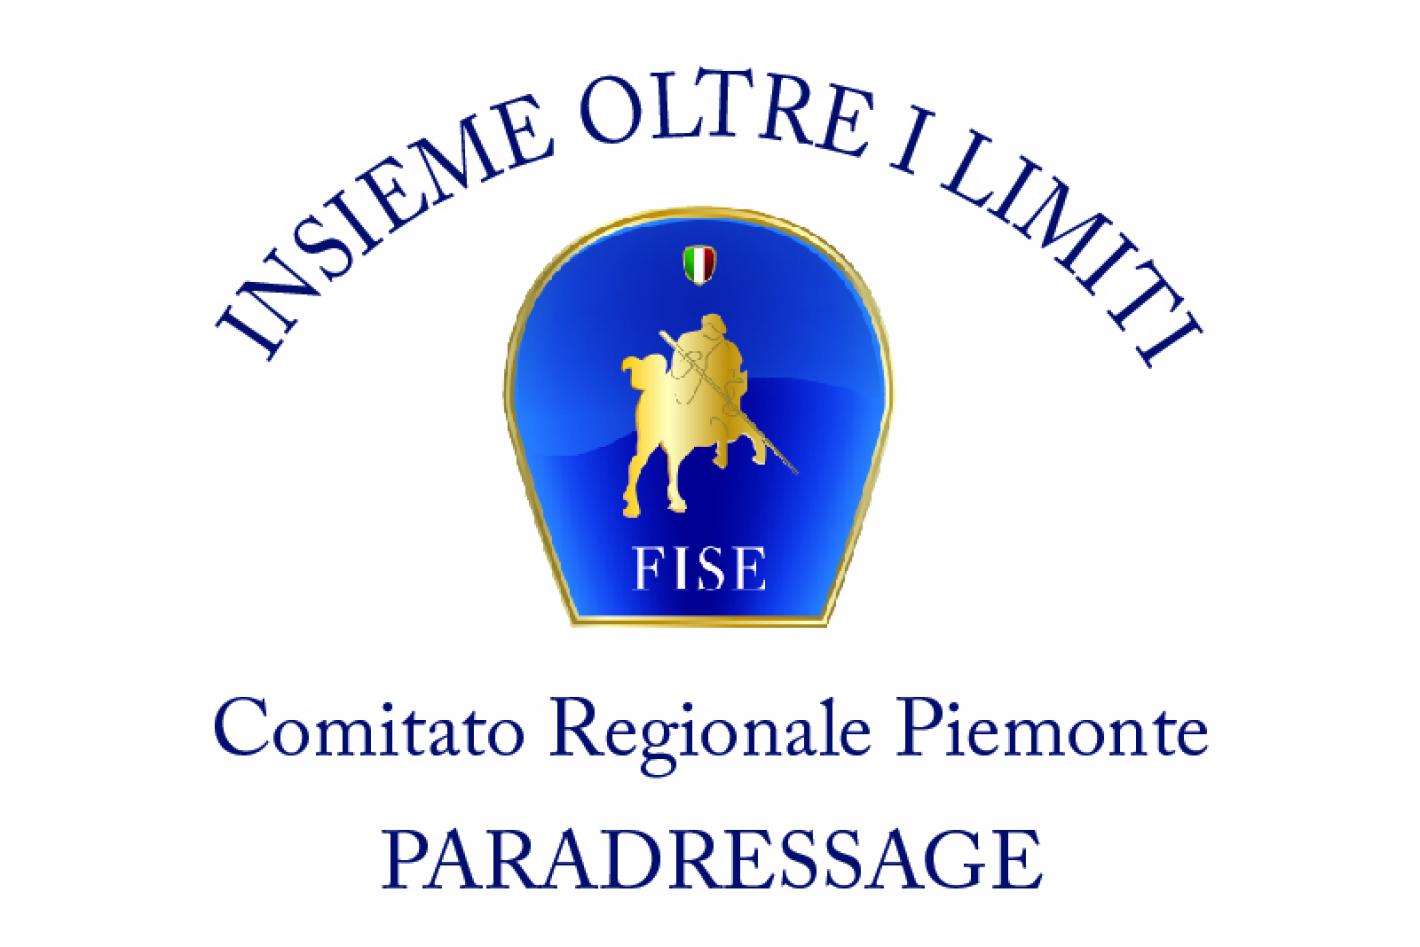 images/piemonte/Piemonte/insieme_oltre_i_limiti/medium/logo_insieme_oltre_limiti_1.jpg